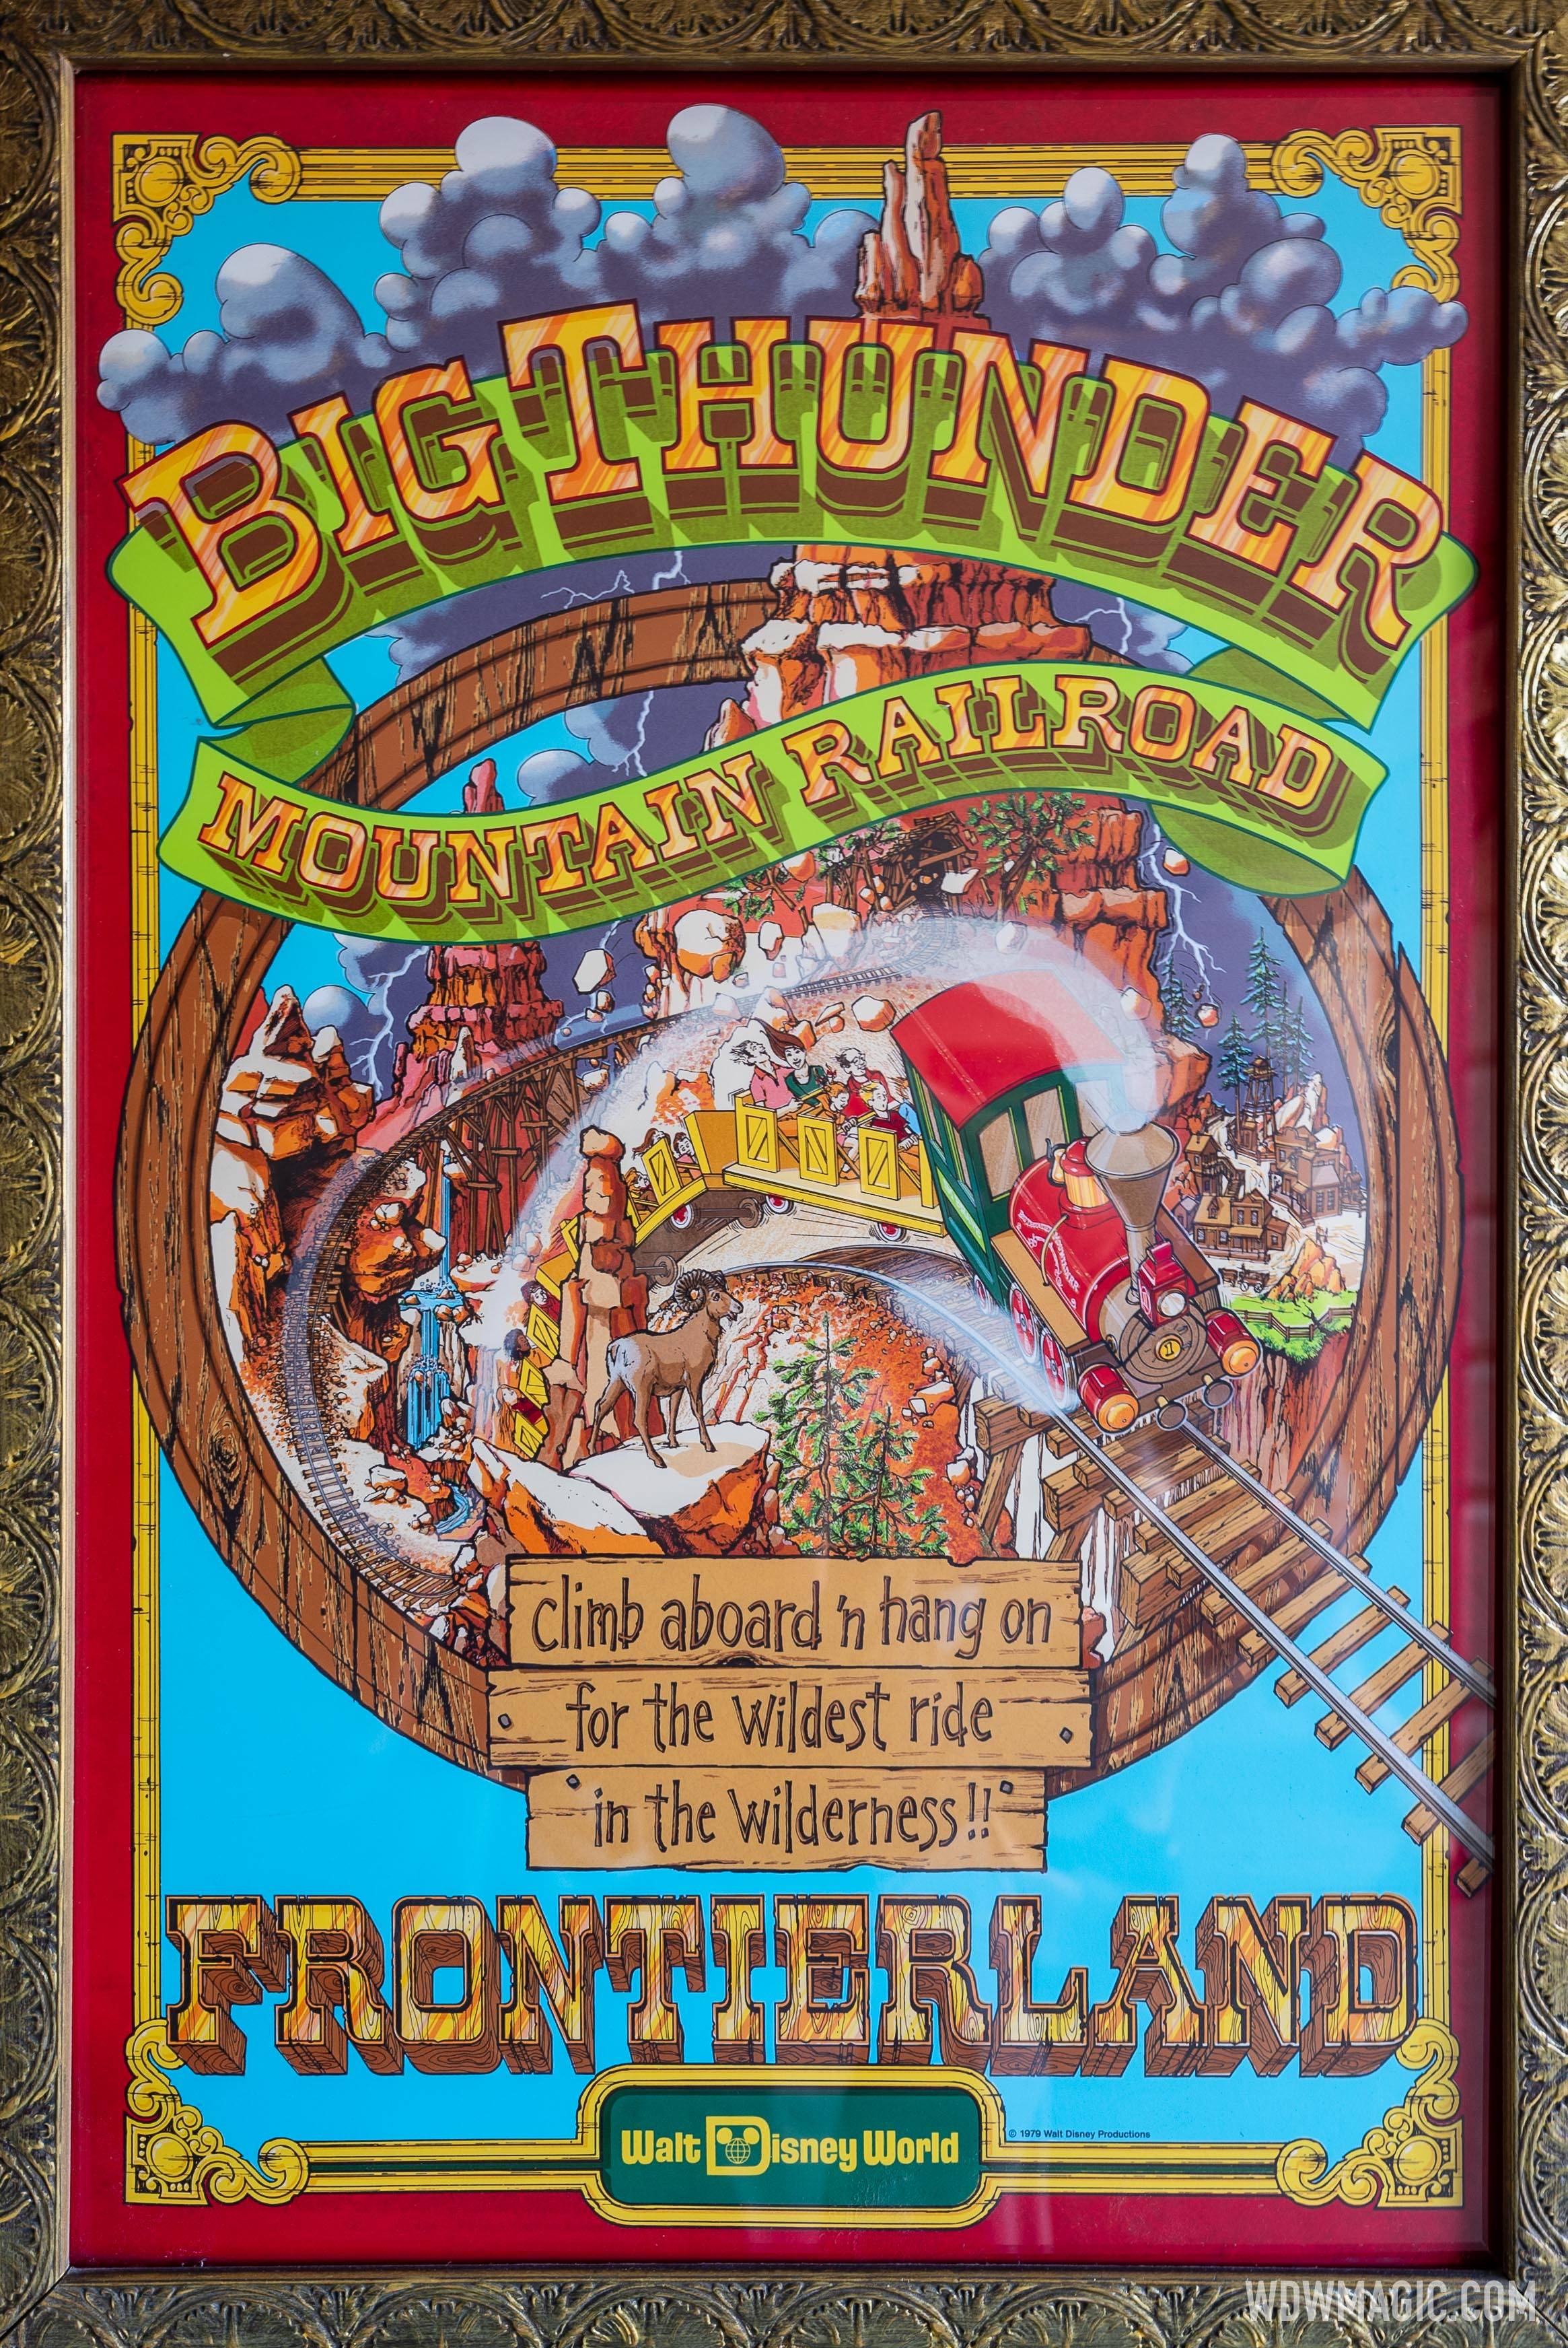 Magic Kingdom vintage attraction poster - Big Thunder Mountain Railroad